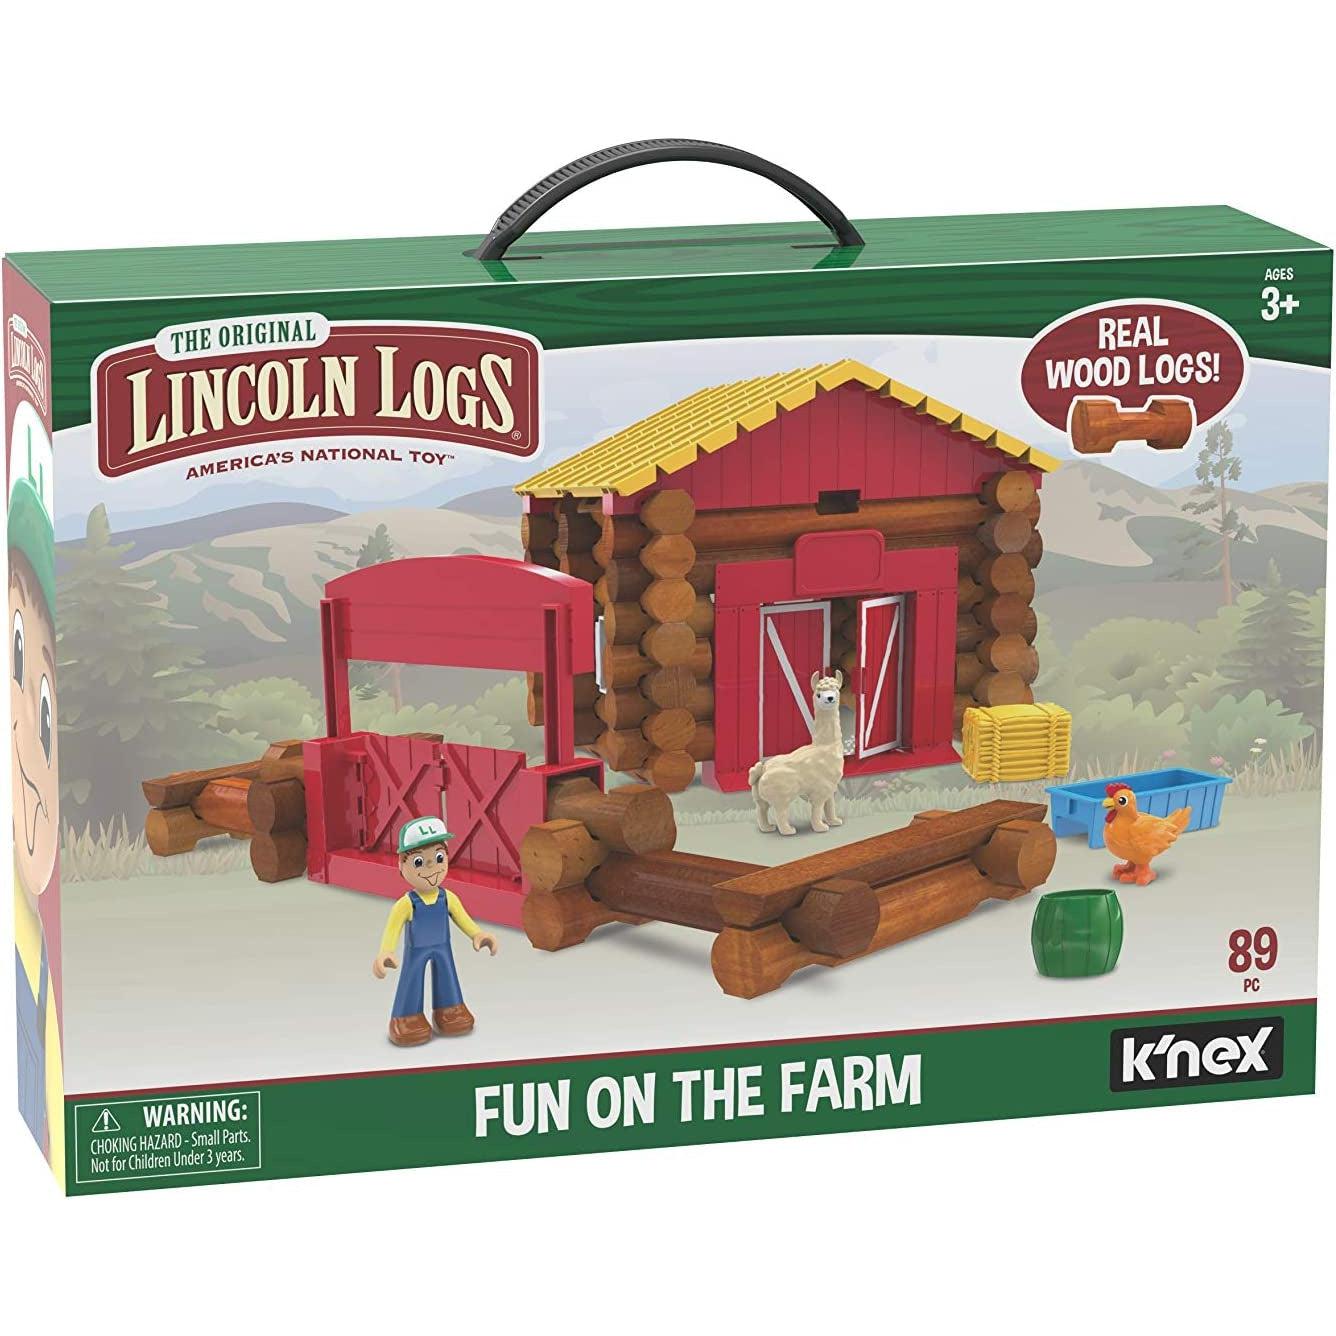 KNEX-Lincoln Logs - 102 Piece Fun on the Farm - Building Set-00858-Legacy Toys